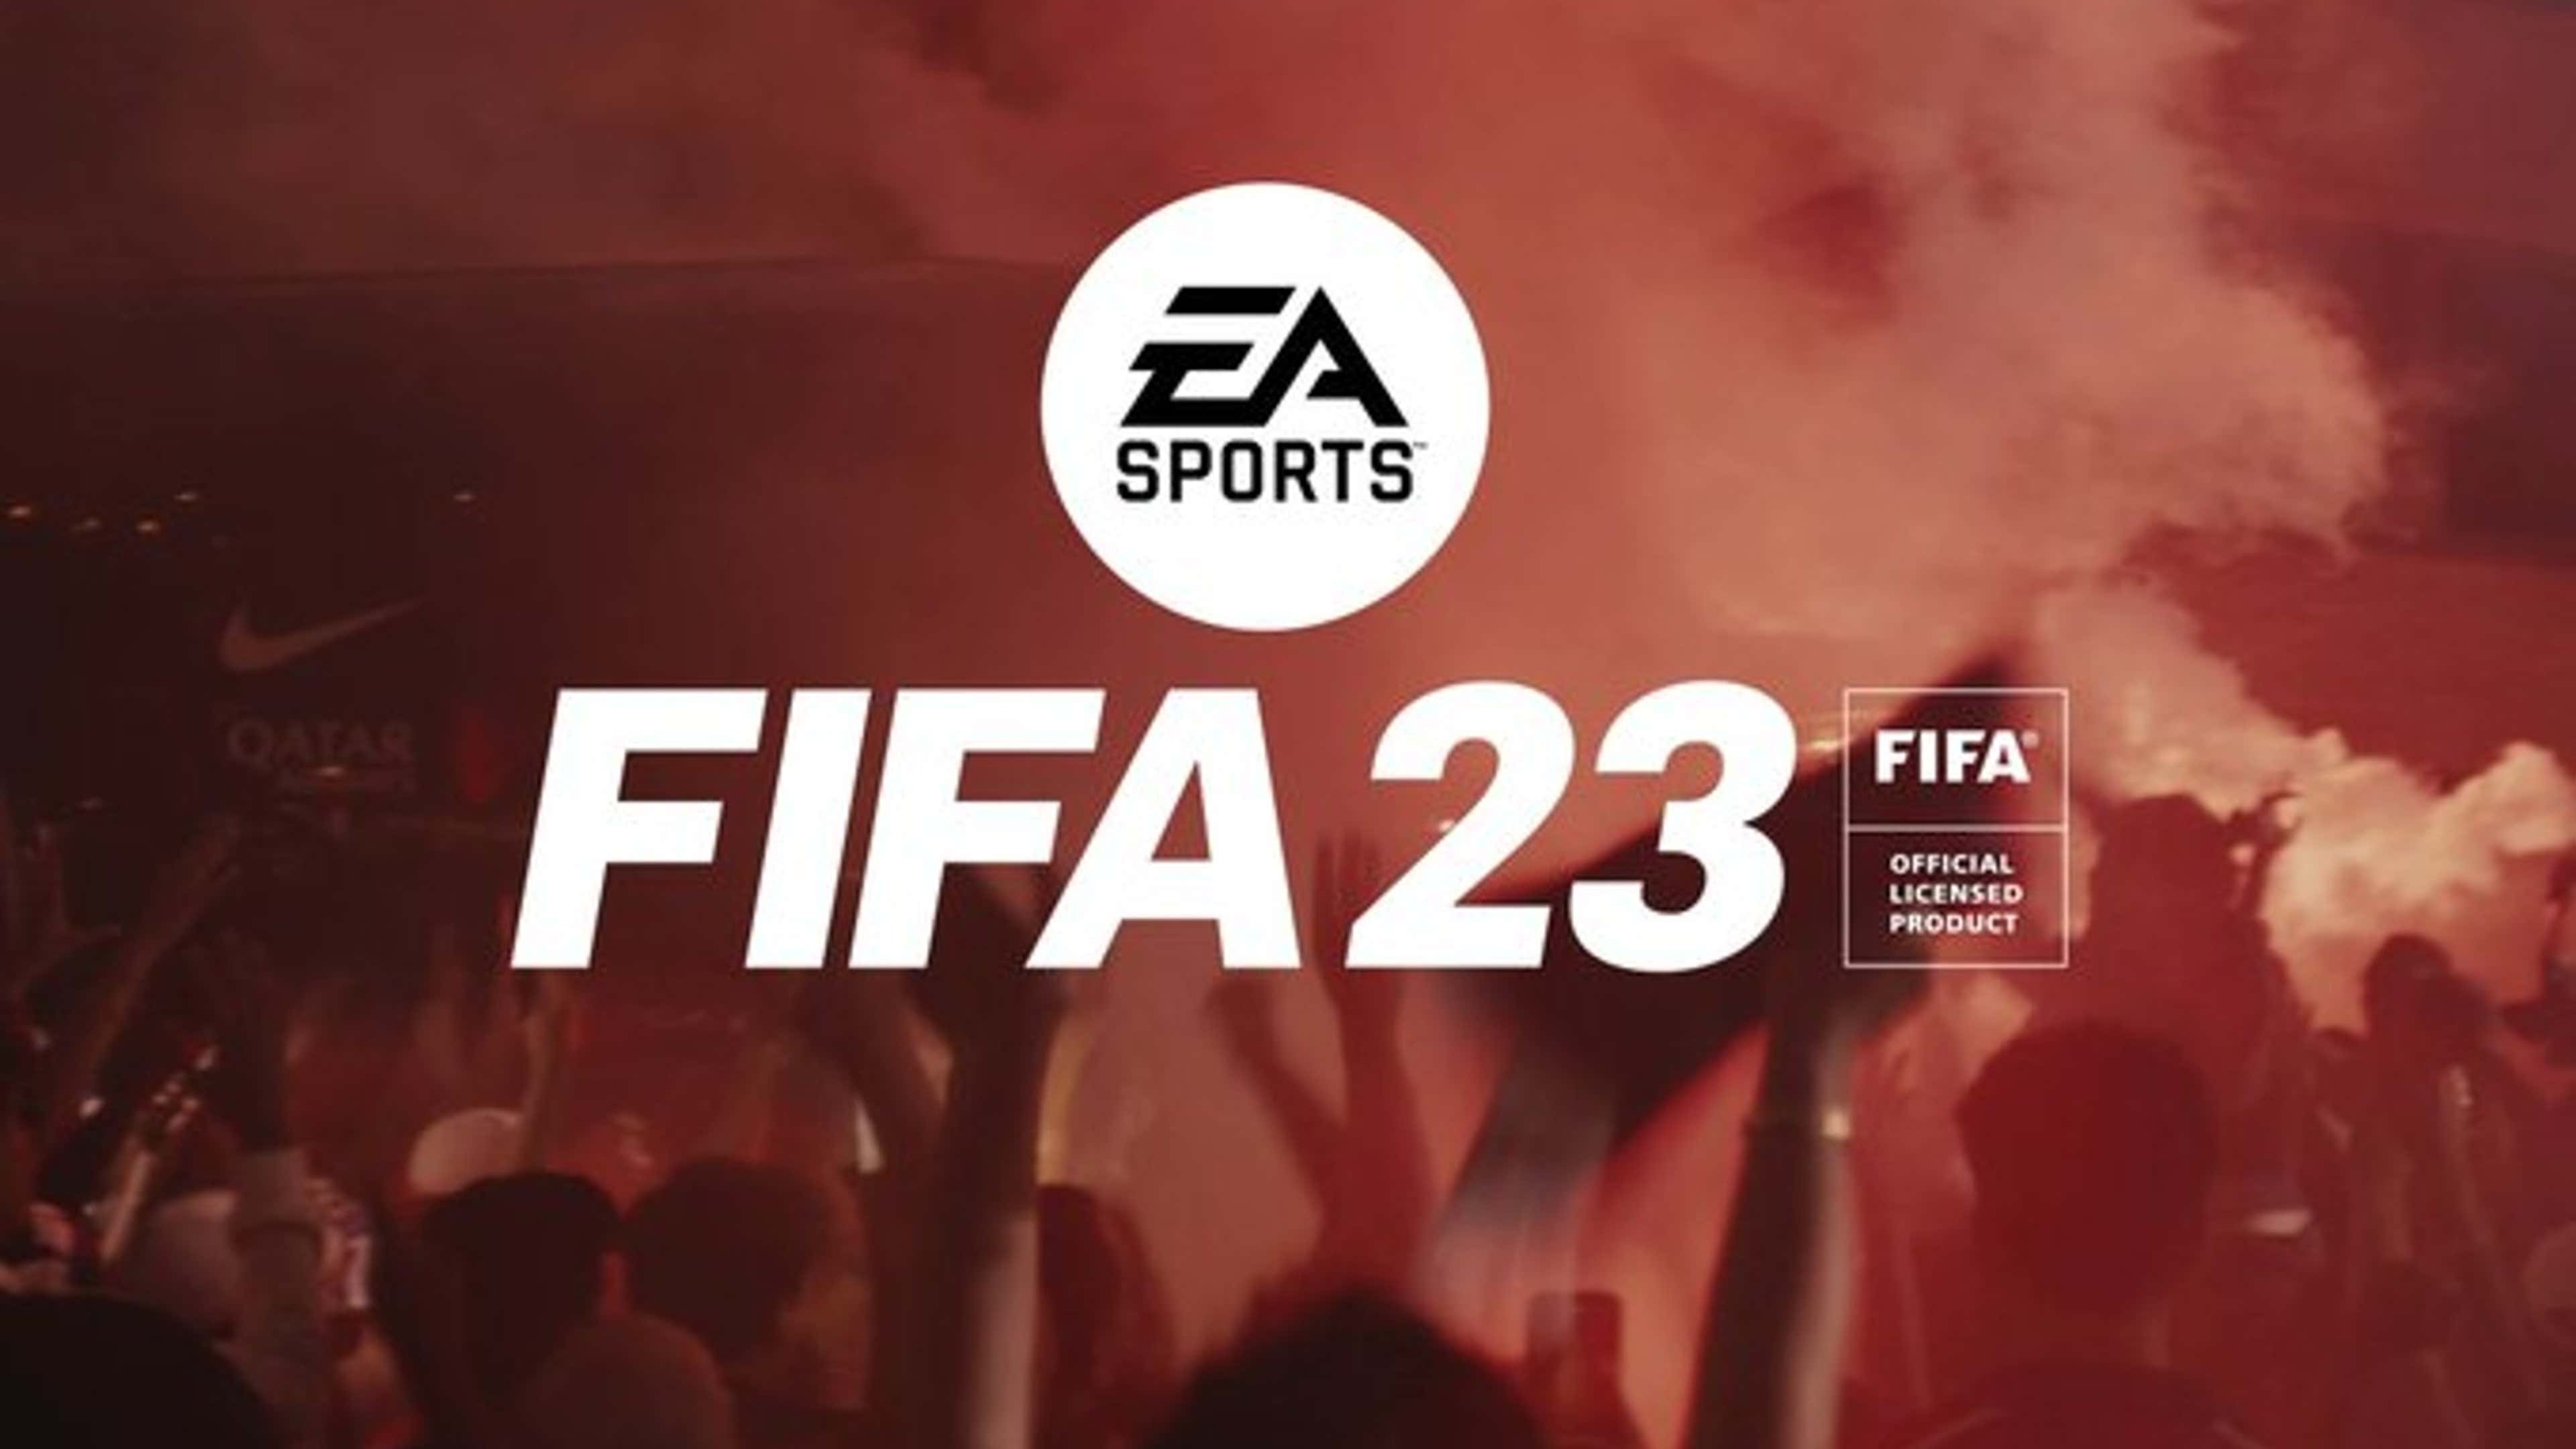 FIFA 23 launch EA Sports 1920x1080